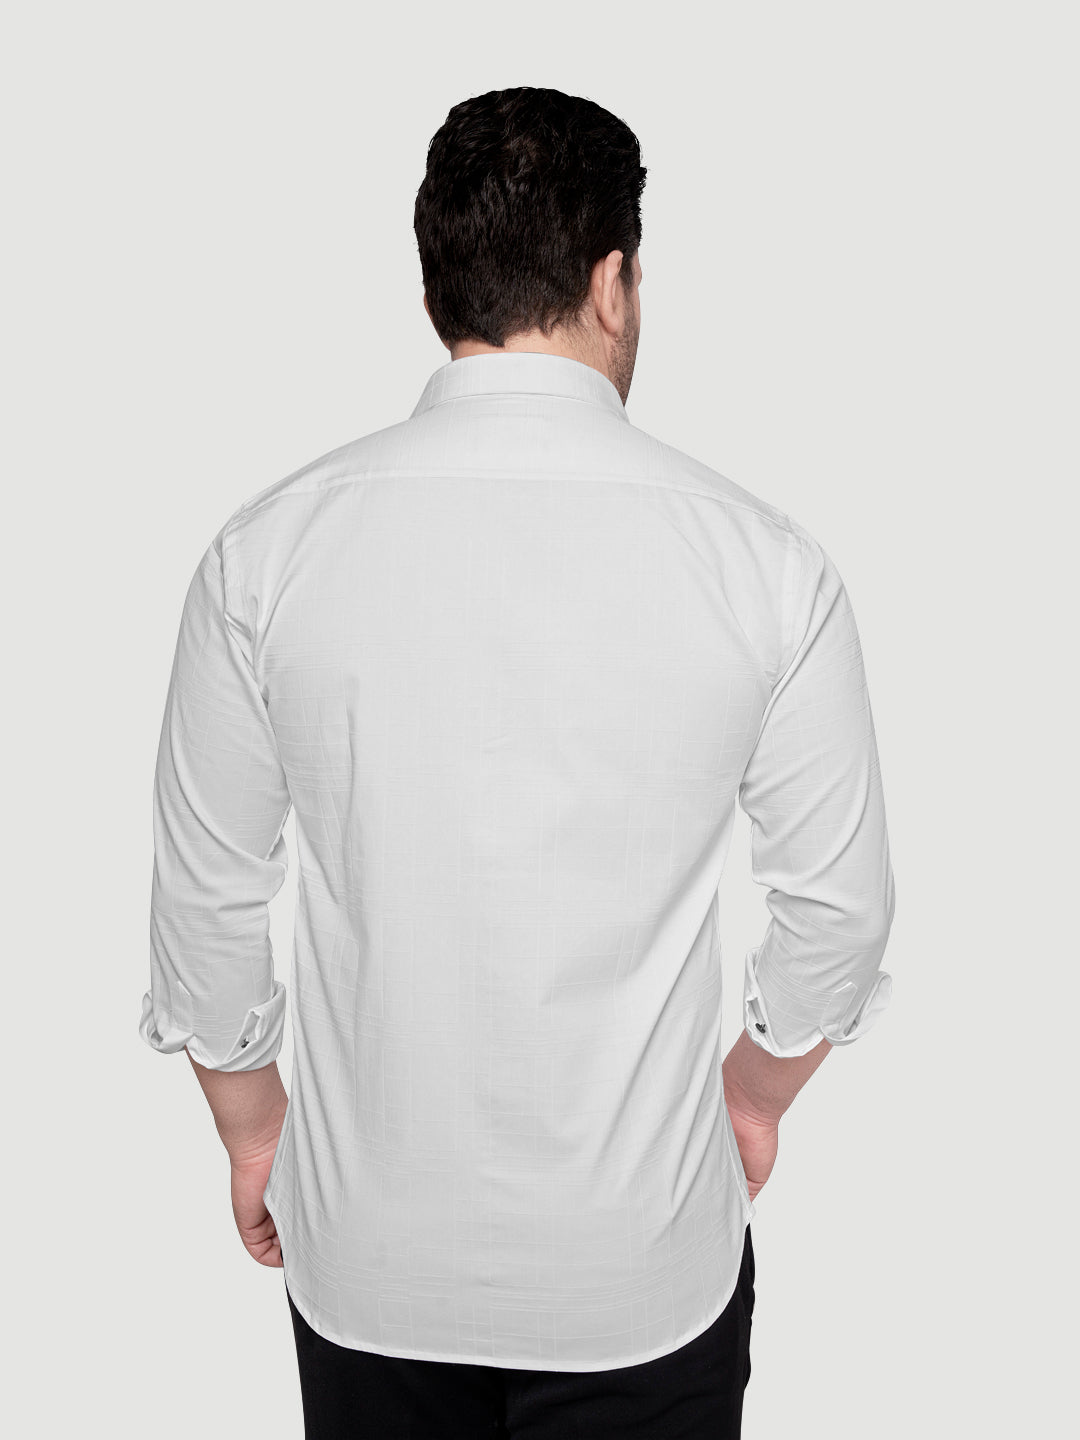 Men's Designer Shirt with Collar Accessory & Broach-2